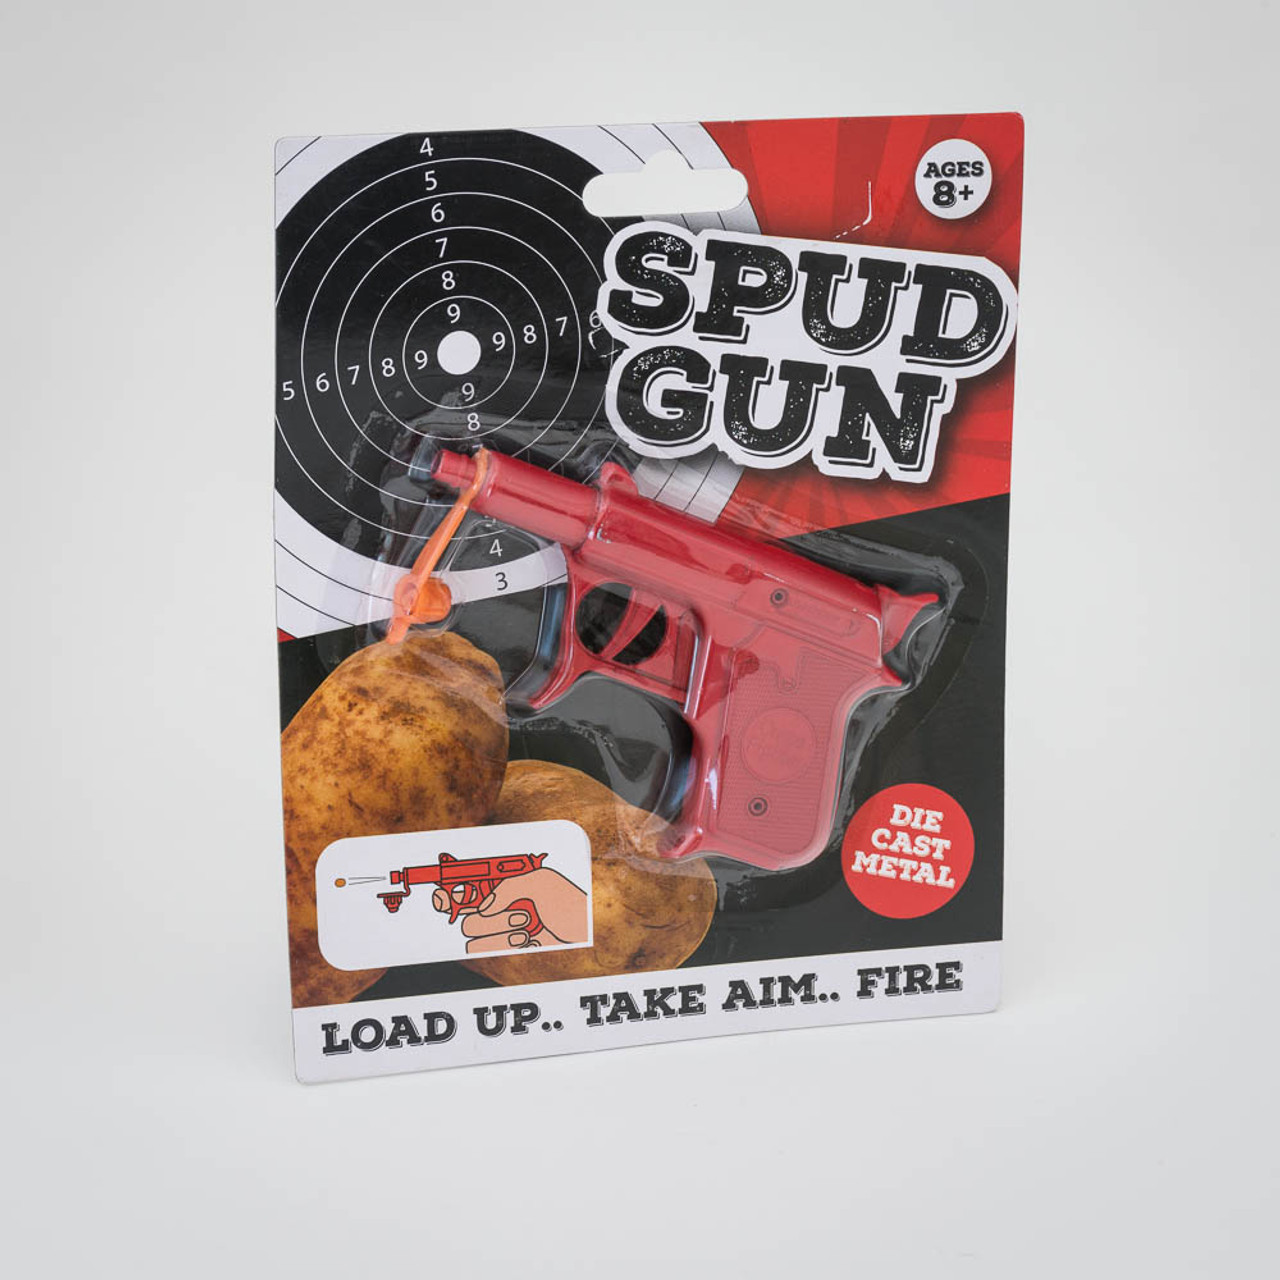 The Source - Spud Shooter - Παιδικό μεταλλικό περίστροφο για πατατοπόλεμο